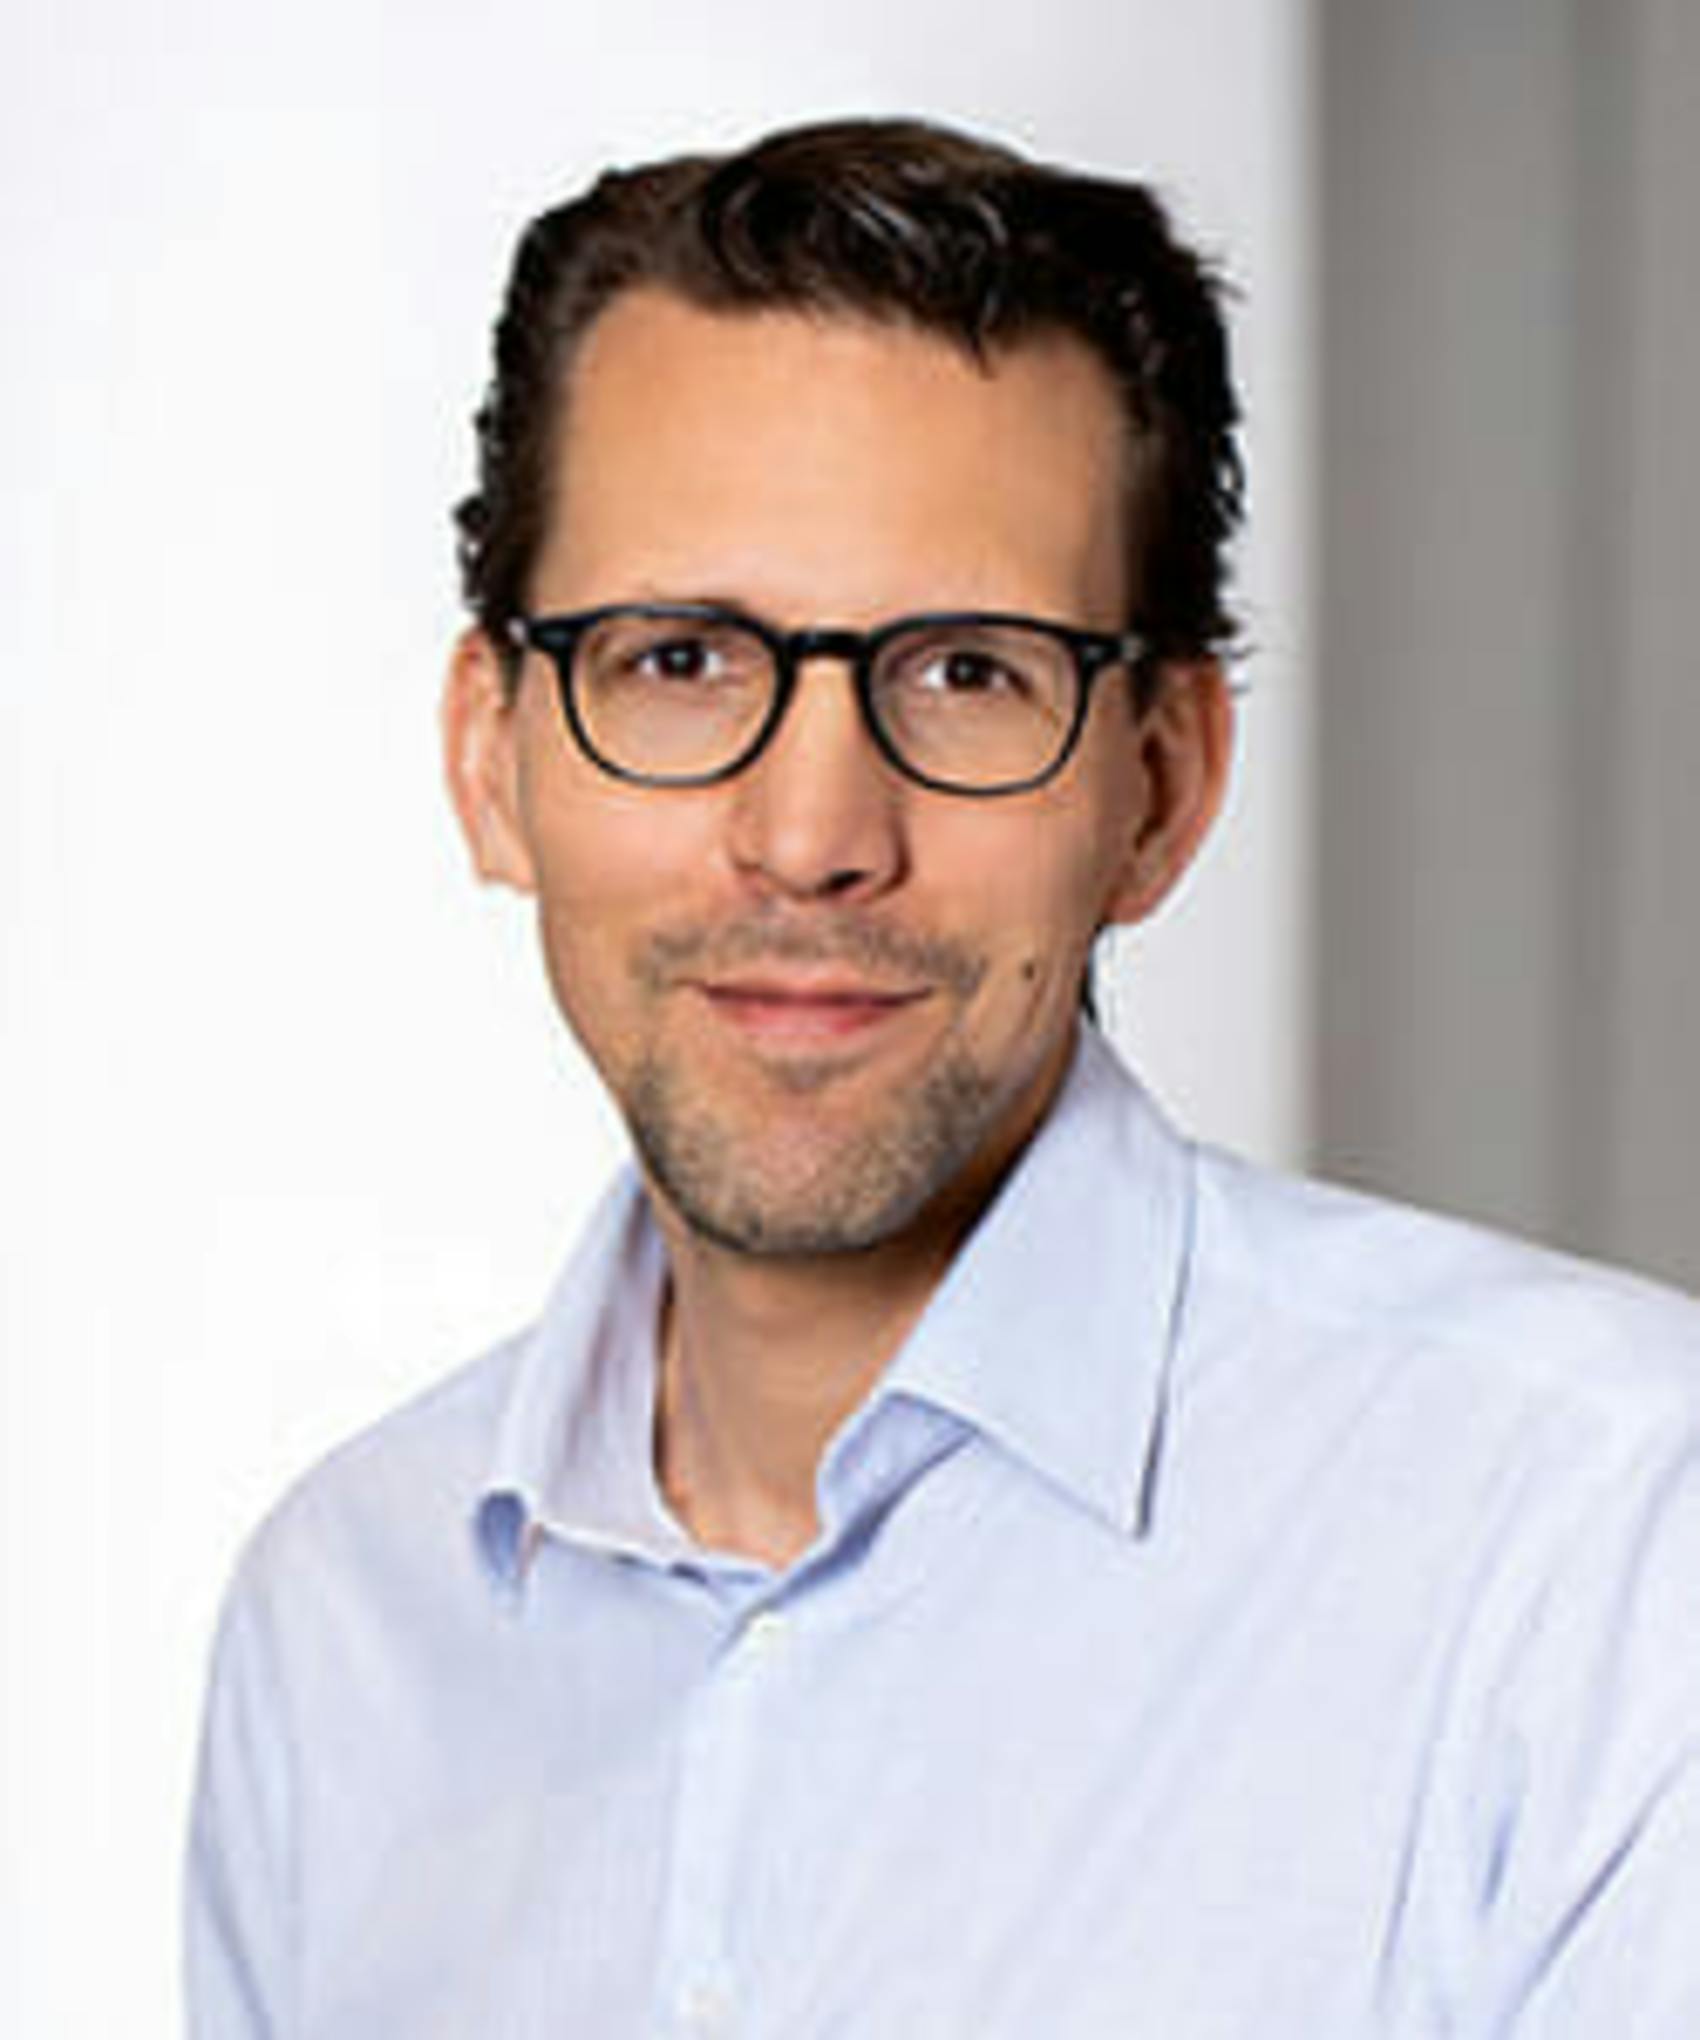 Dr. Stefan Pfaffenberger